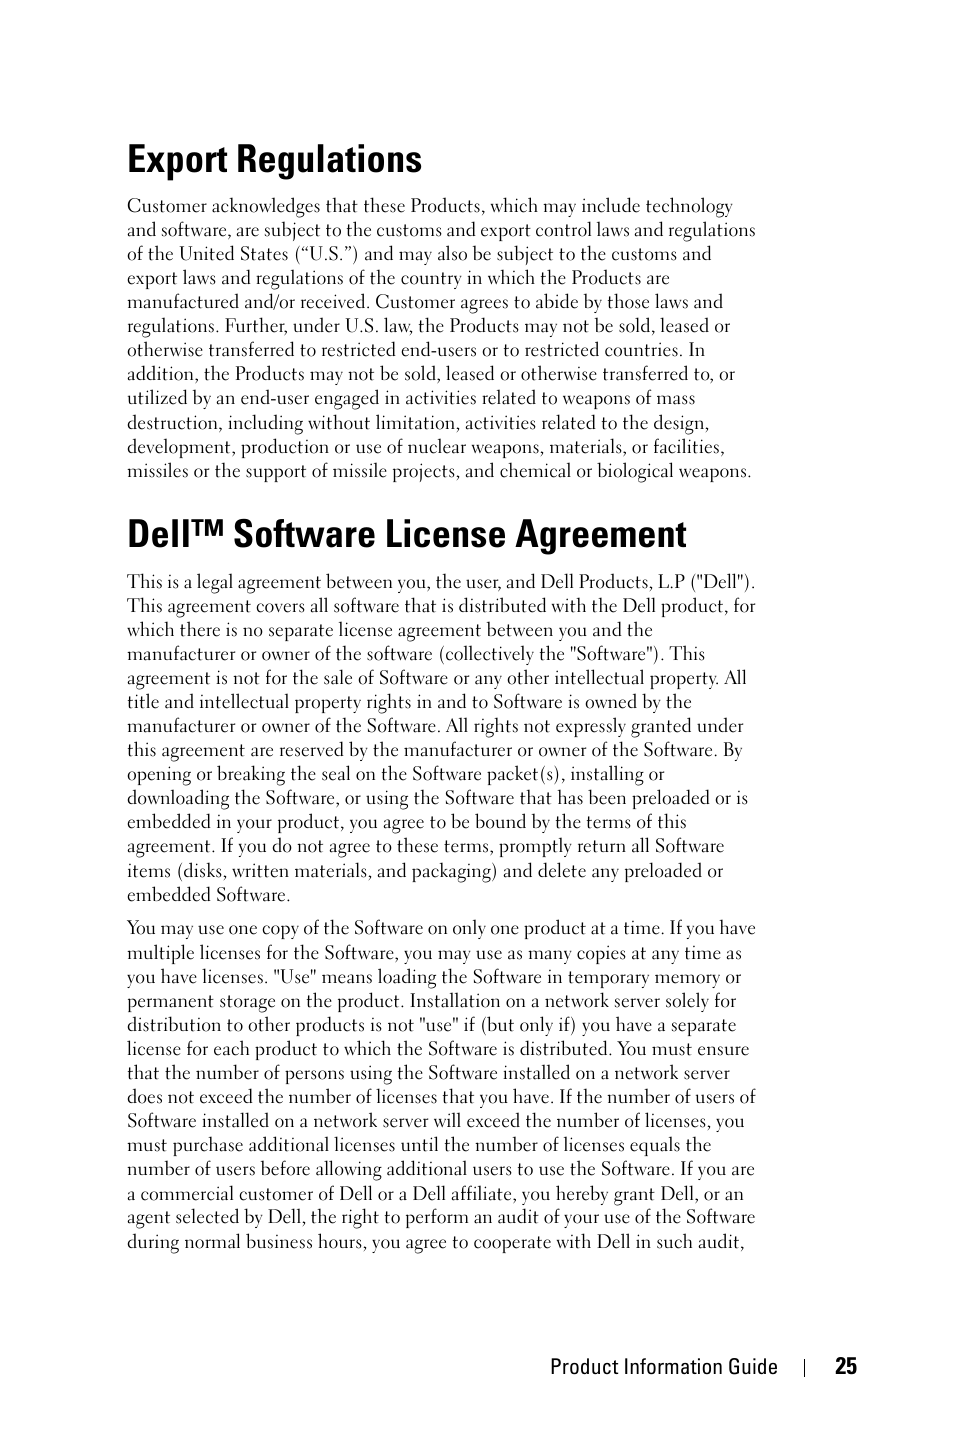 Export regulations, Dell™ software license agreement | Dell XXX Manuel d'utilisation | Page 25 / 94